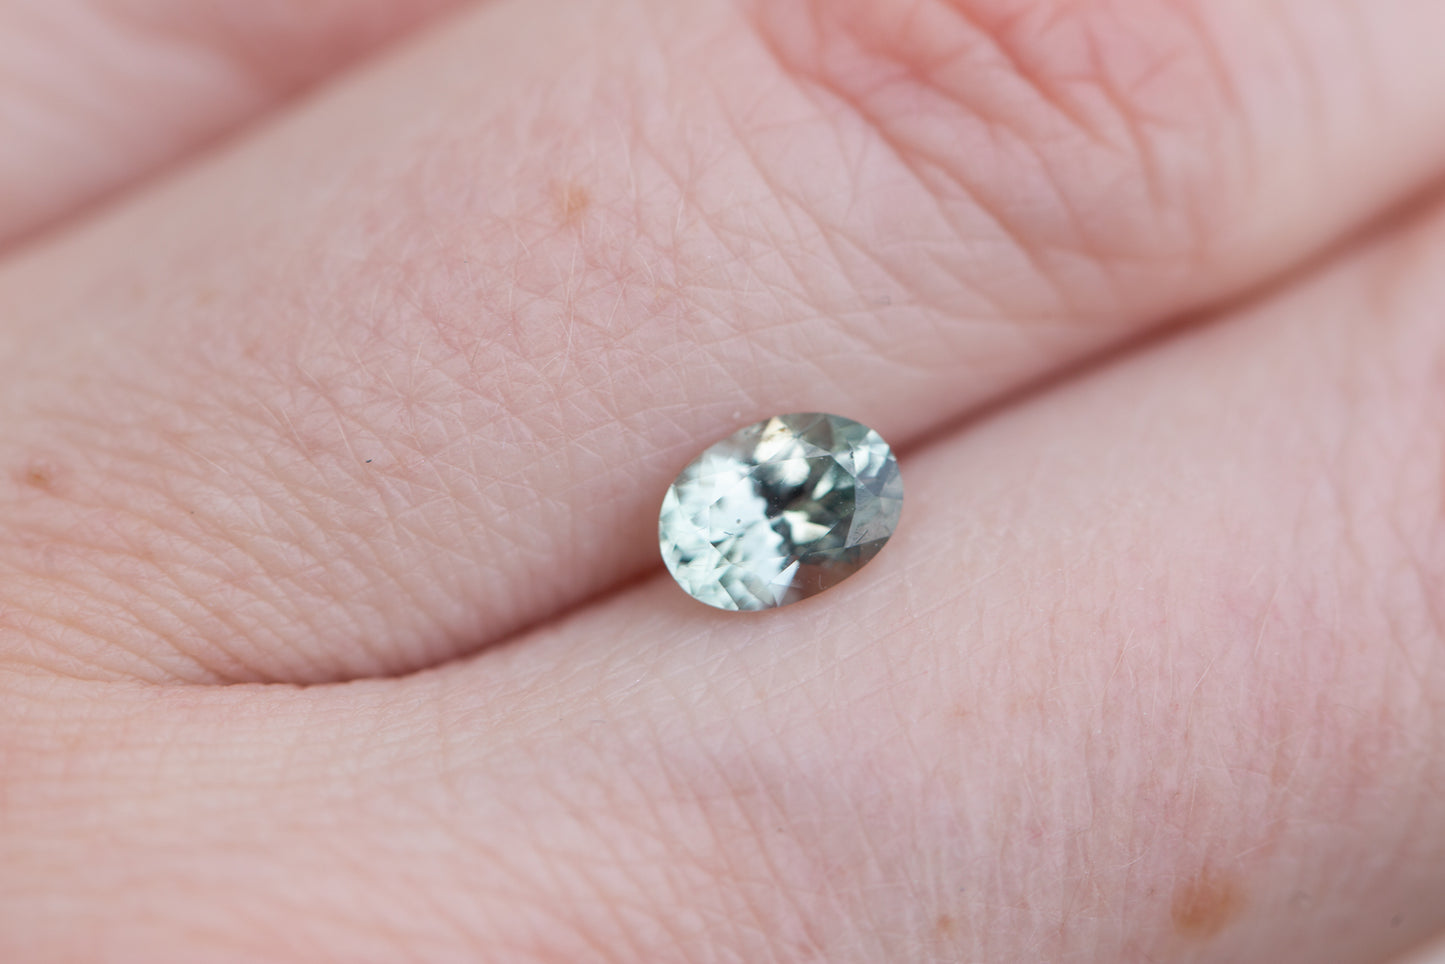 .98ct oval mint sapphire